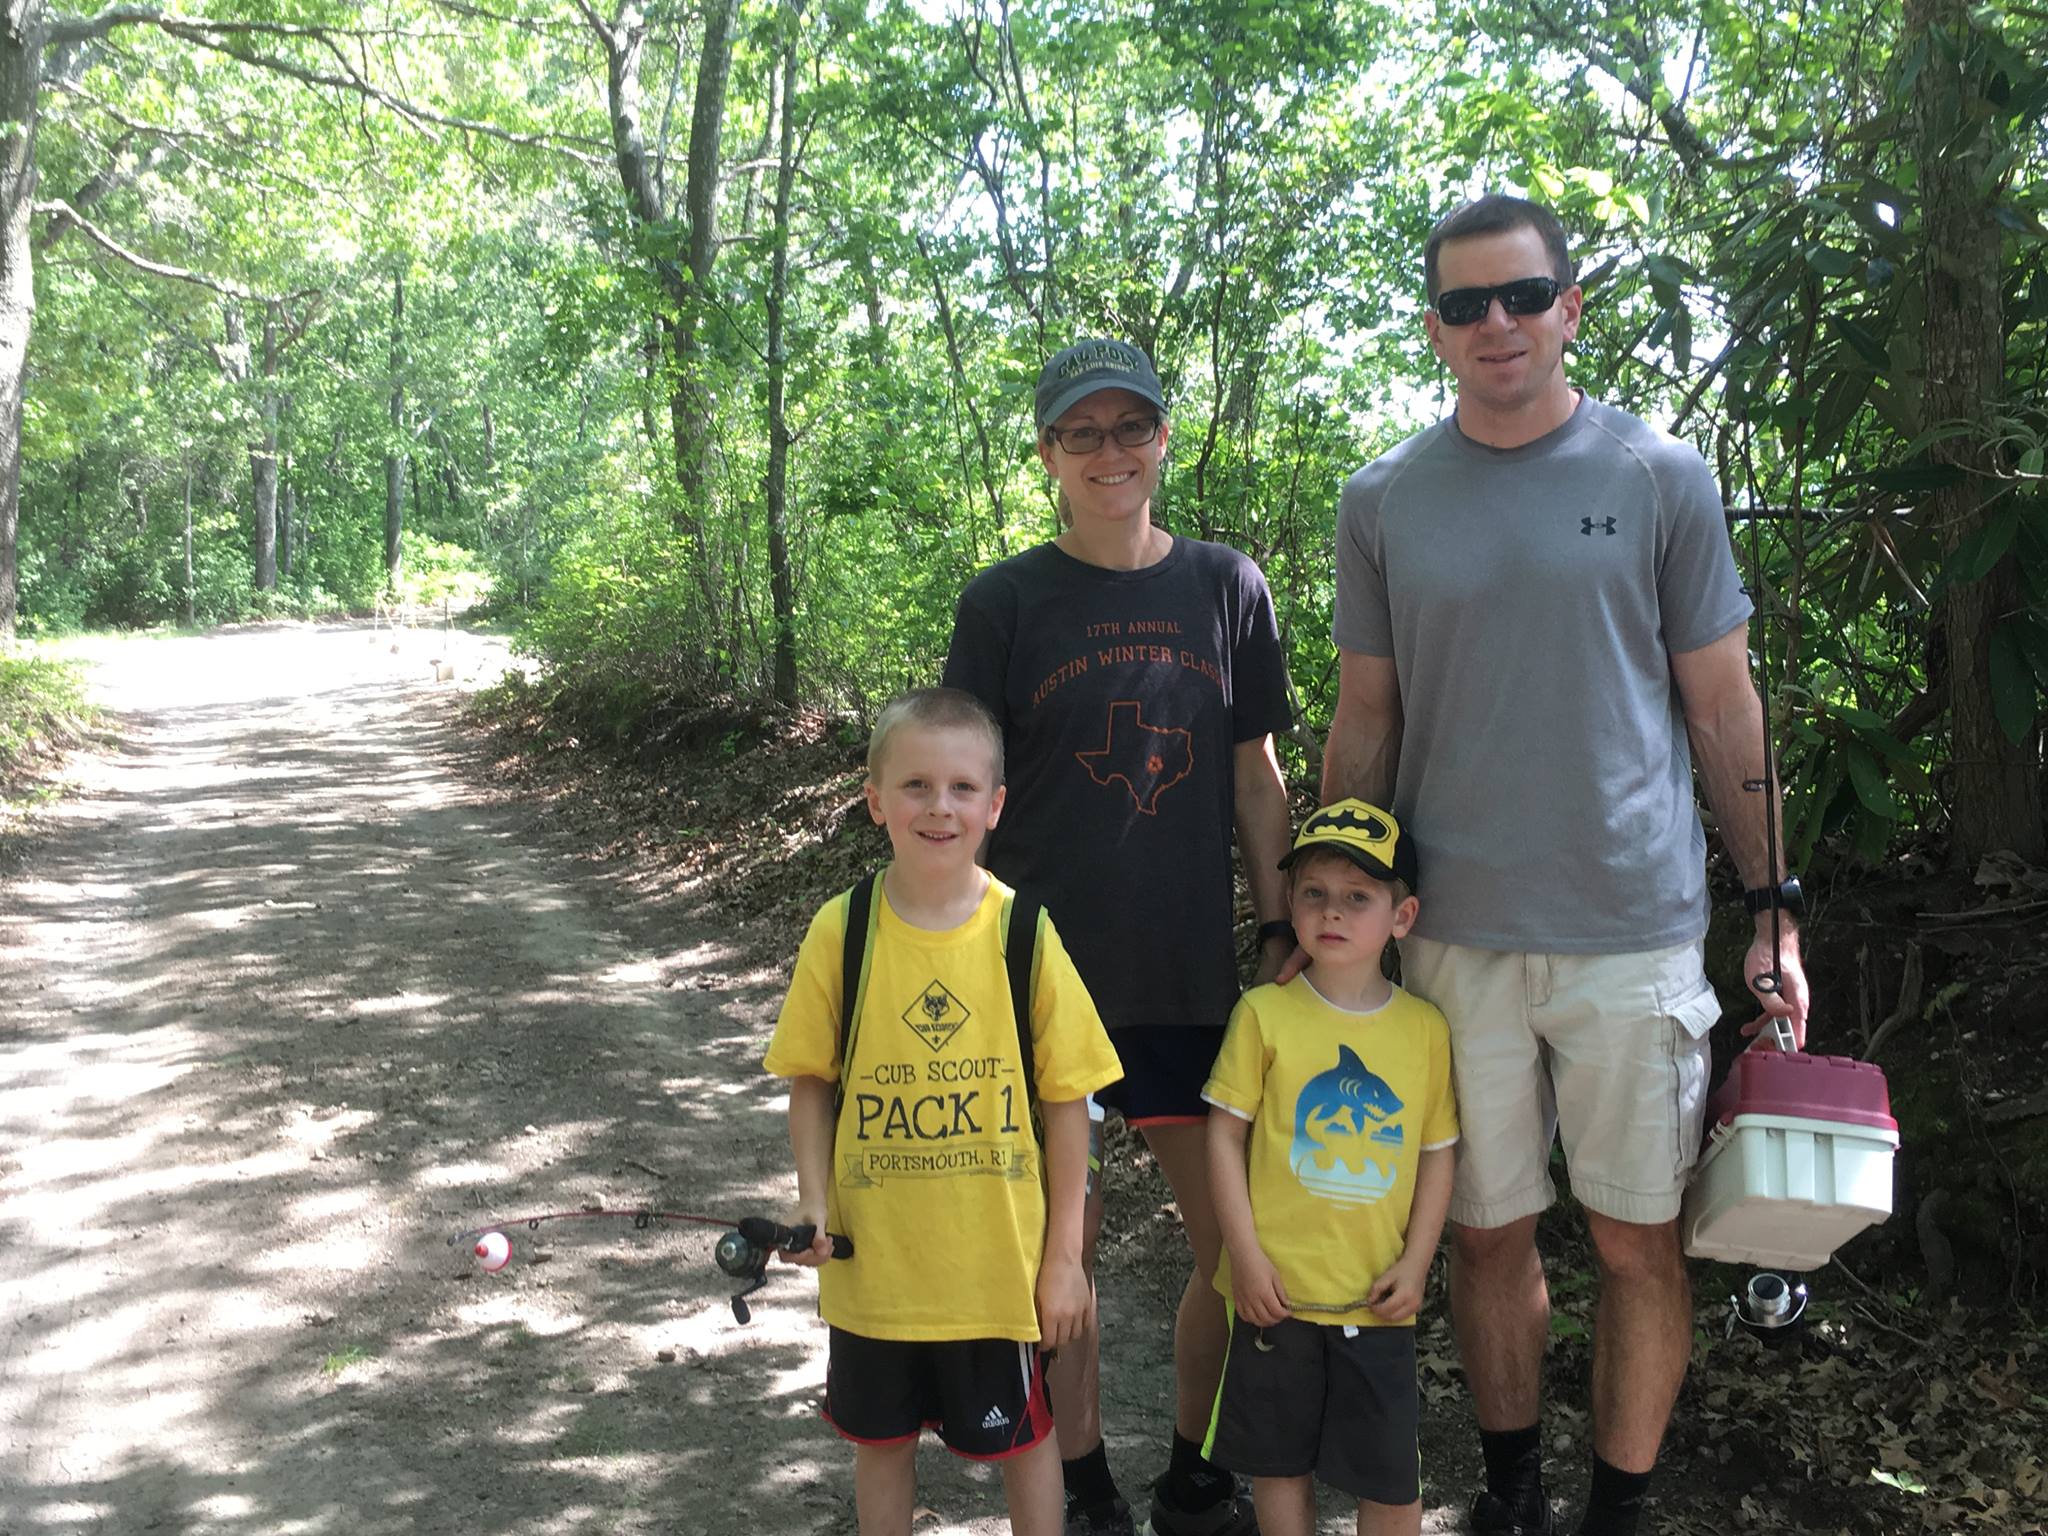 Family hiking